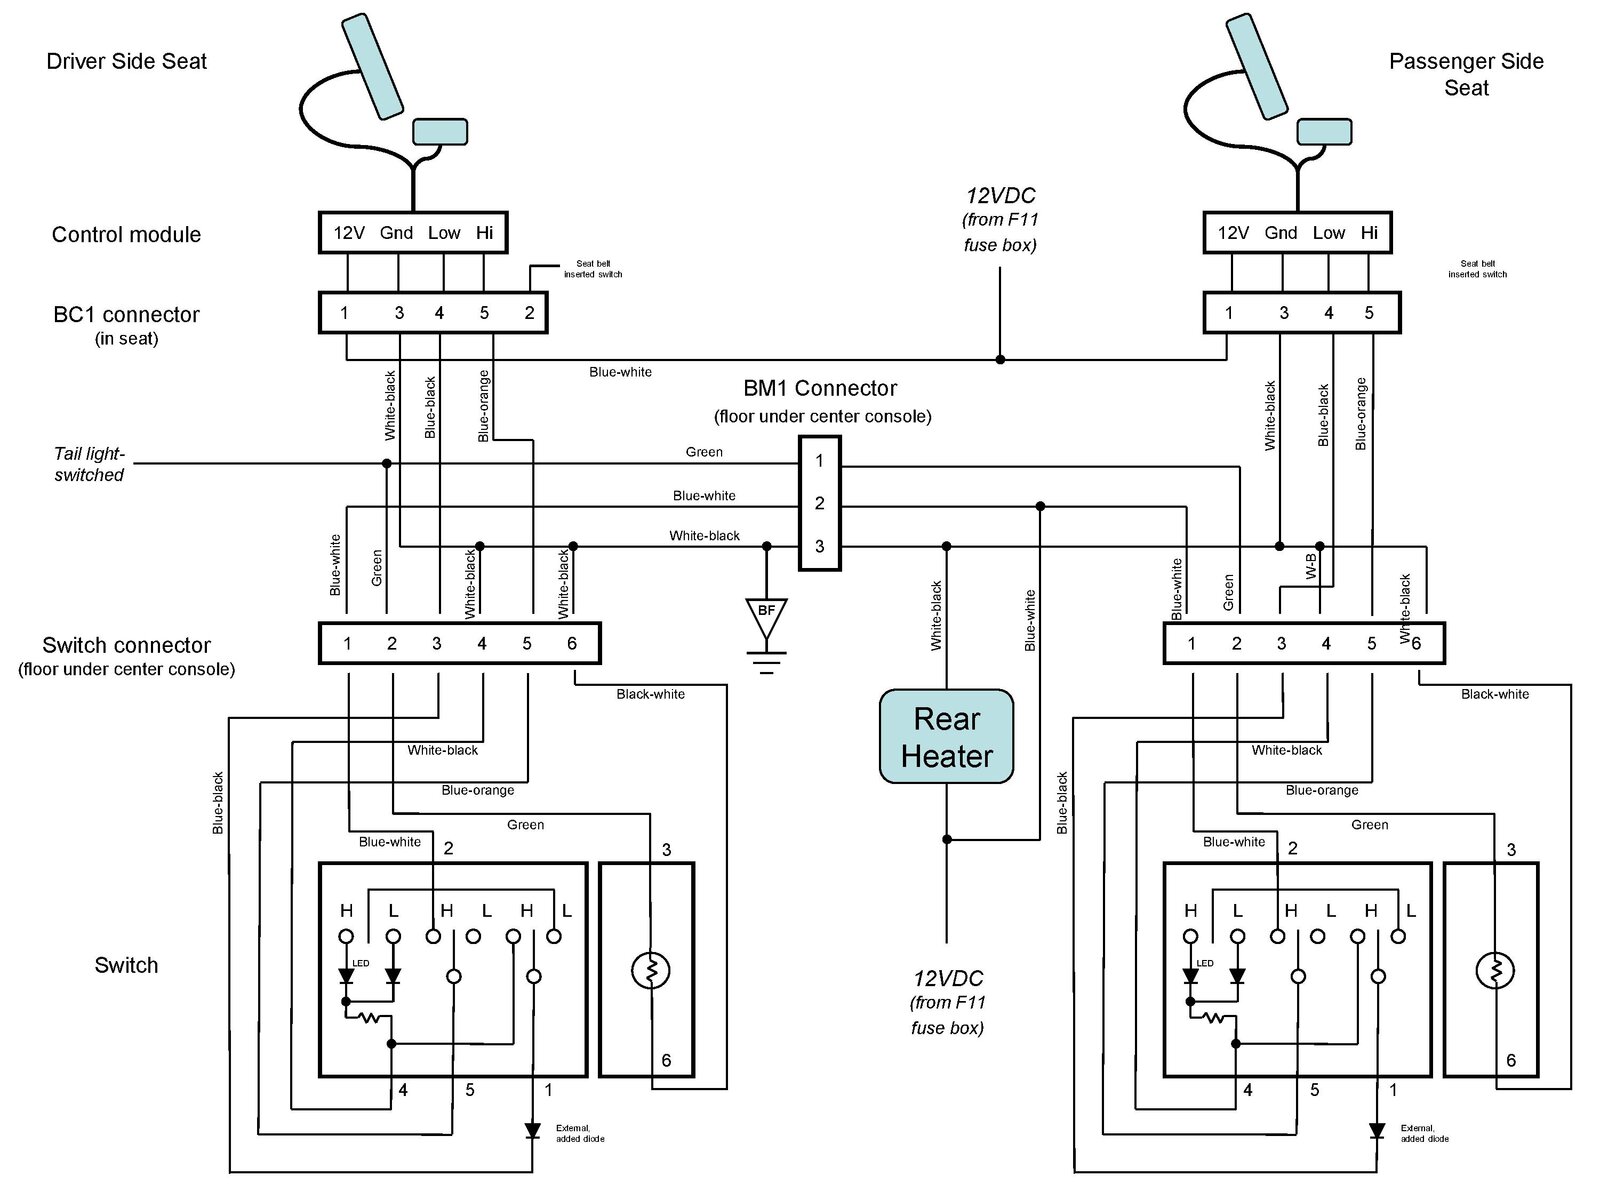 Seat heater schematic v2-page1.jpg